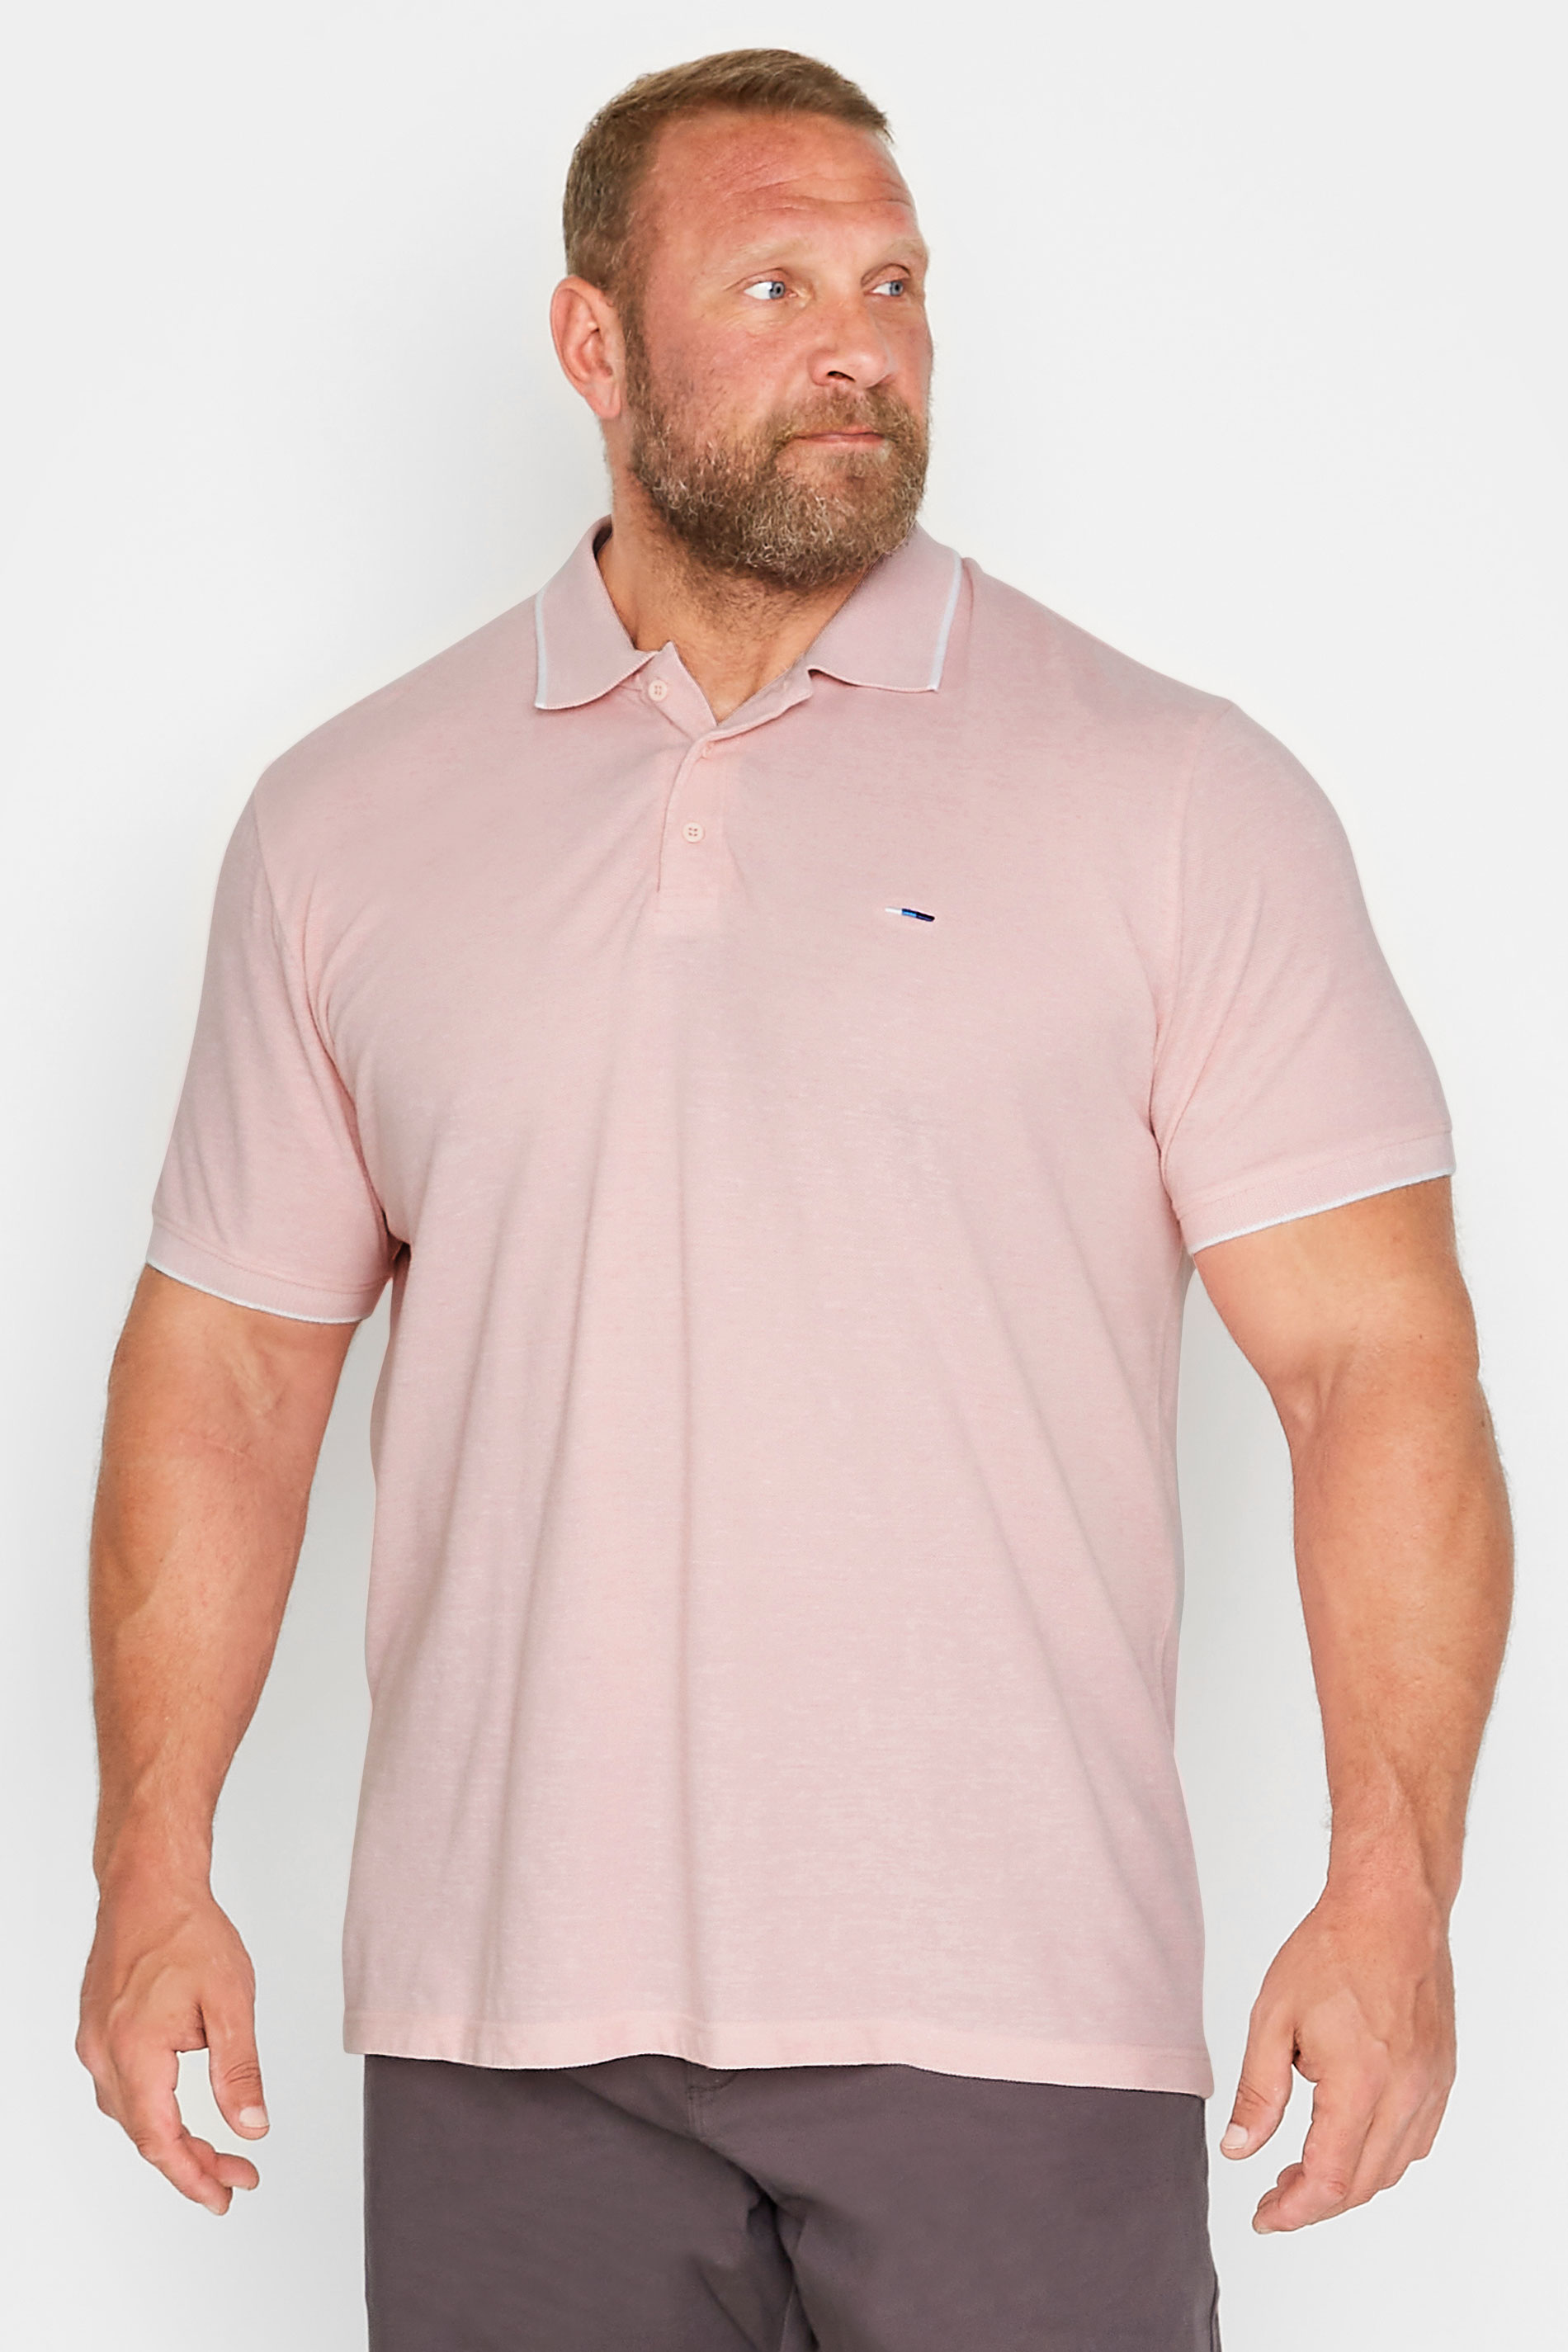 BadRhino Big & Tall Light Pink Birdseye Polo Shirt | BadRhino 1